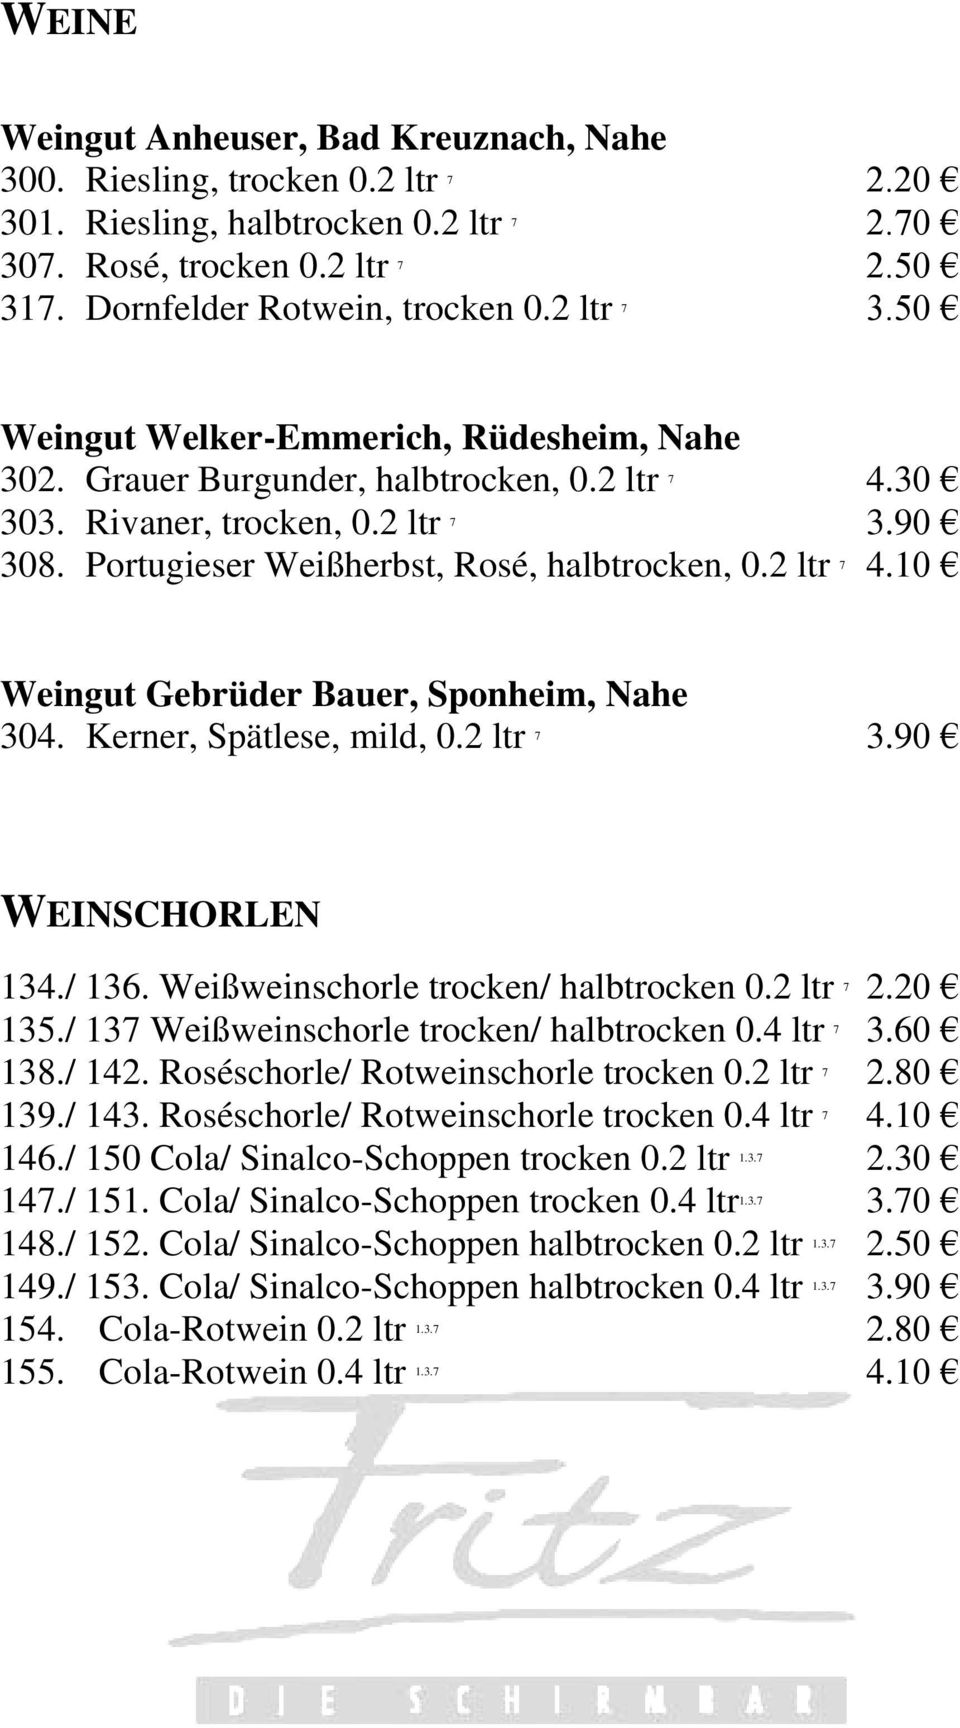 2 ltr 7 4.10 Weingut Gebrüder Bauer, Sponheim, Nahe 304. Kerner, Spätlese, mild, 0.2 ltr 7 3.90 WEINSCHORLEN 134./ 136. Weißweinschorle trocken/ halbtrocken 0.2 ltr 7 2.20 135.